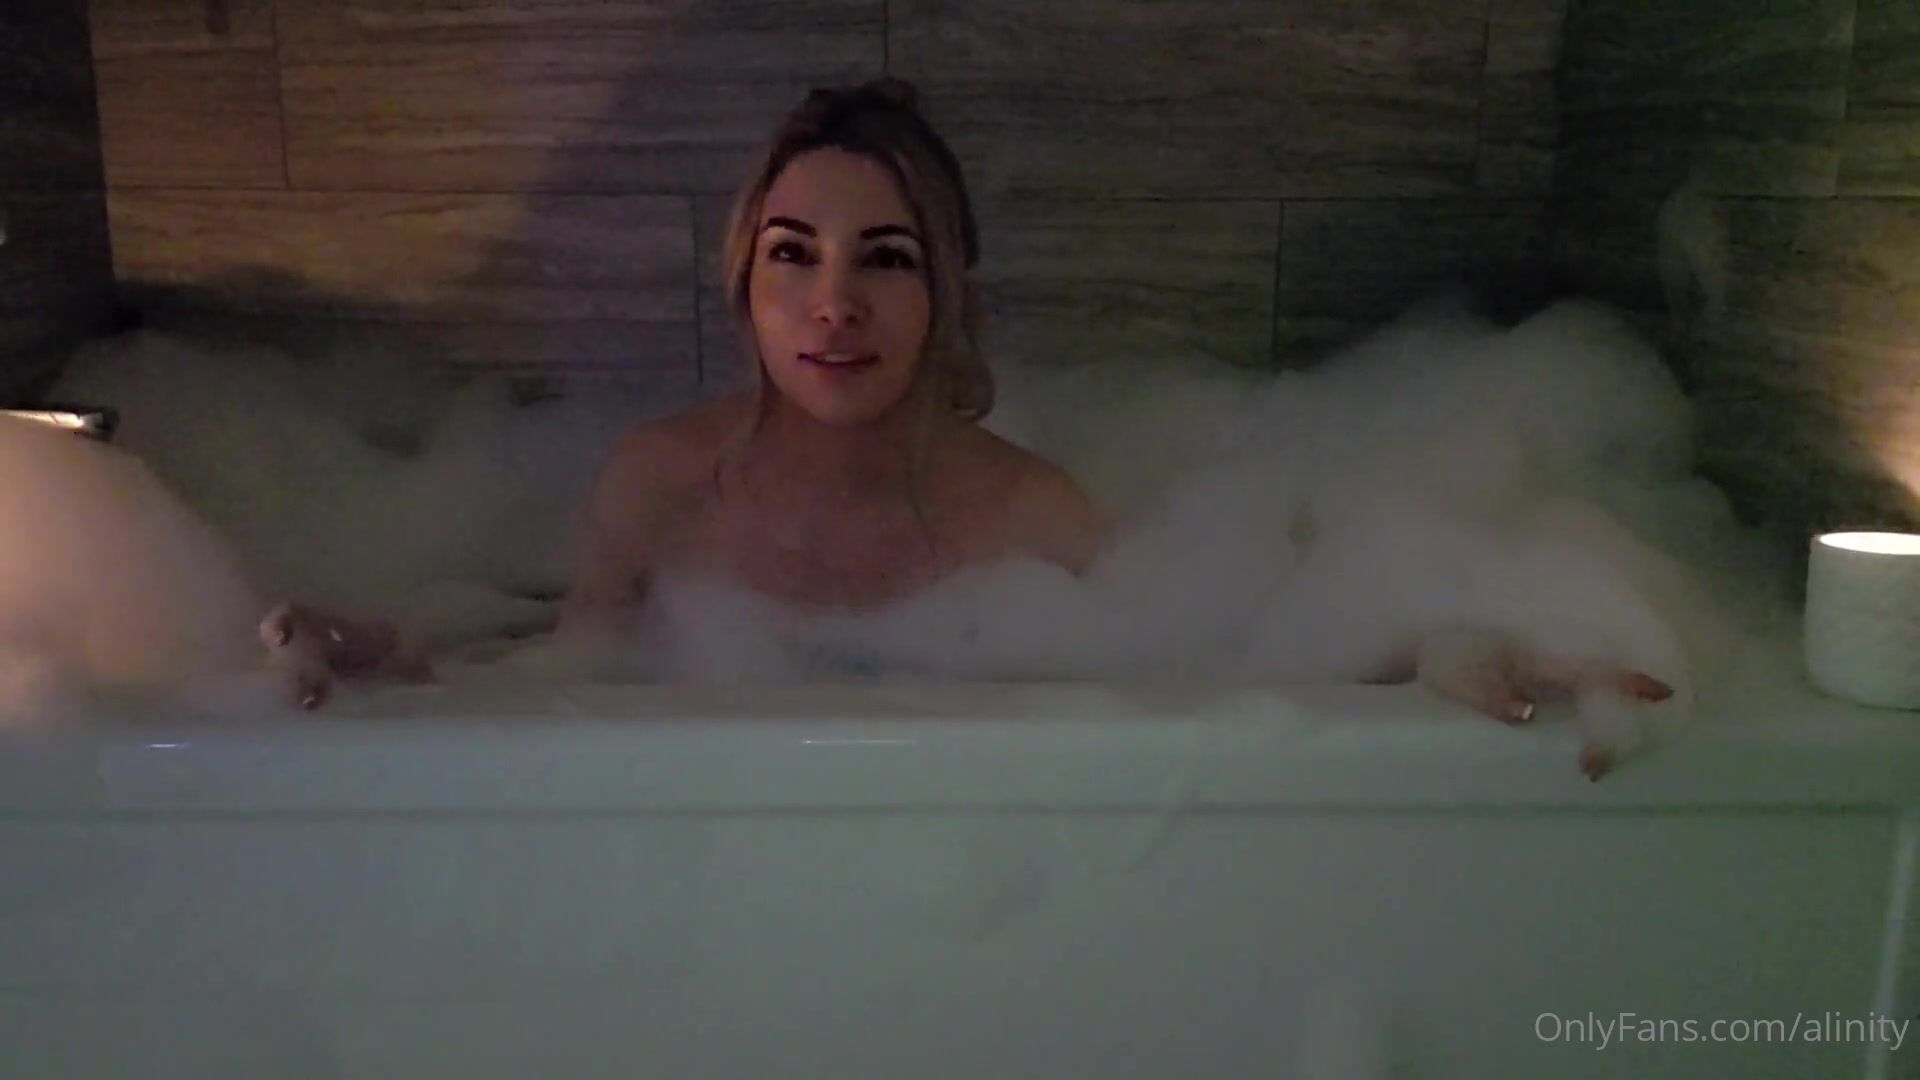 Alinity fully nude bath video leaked